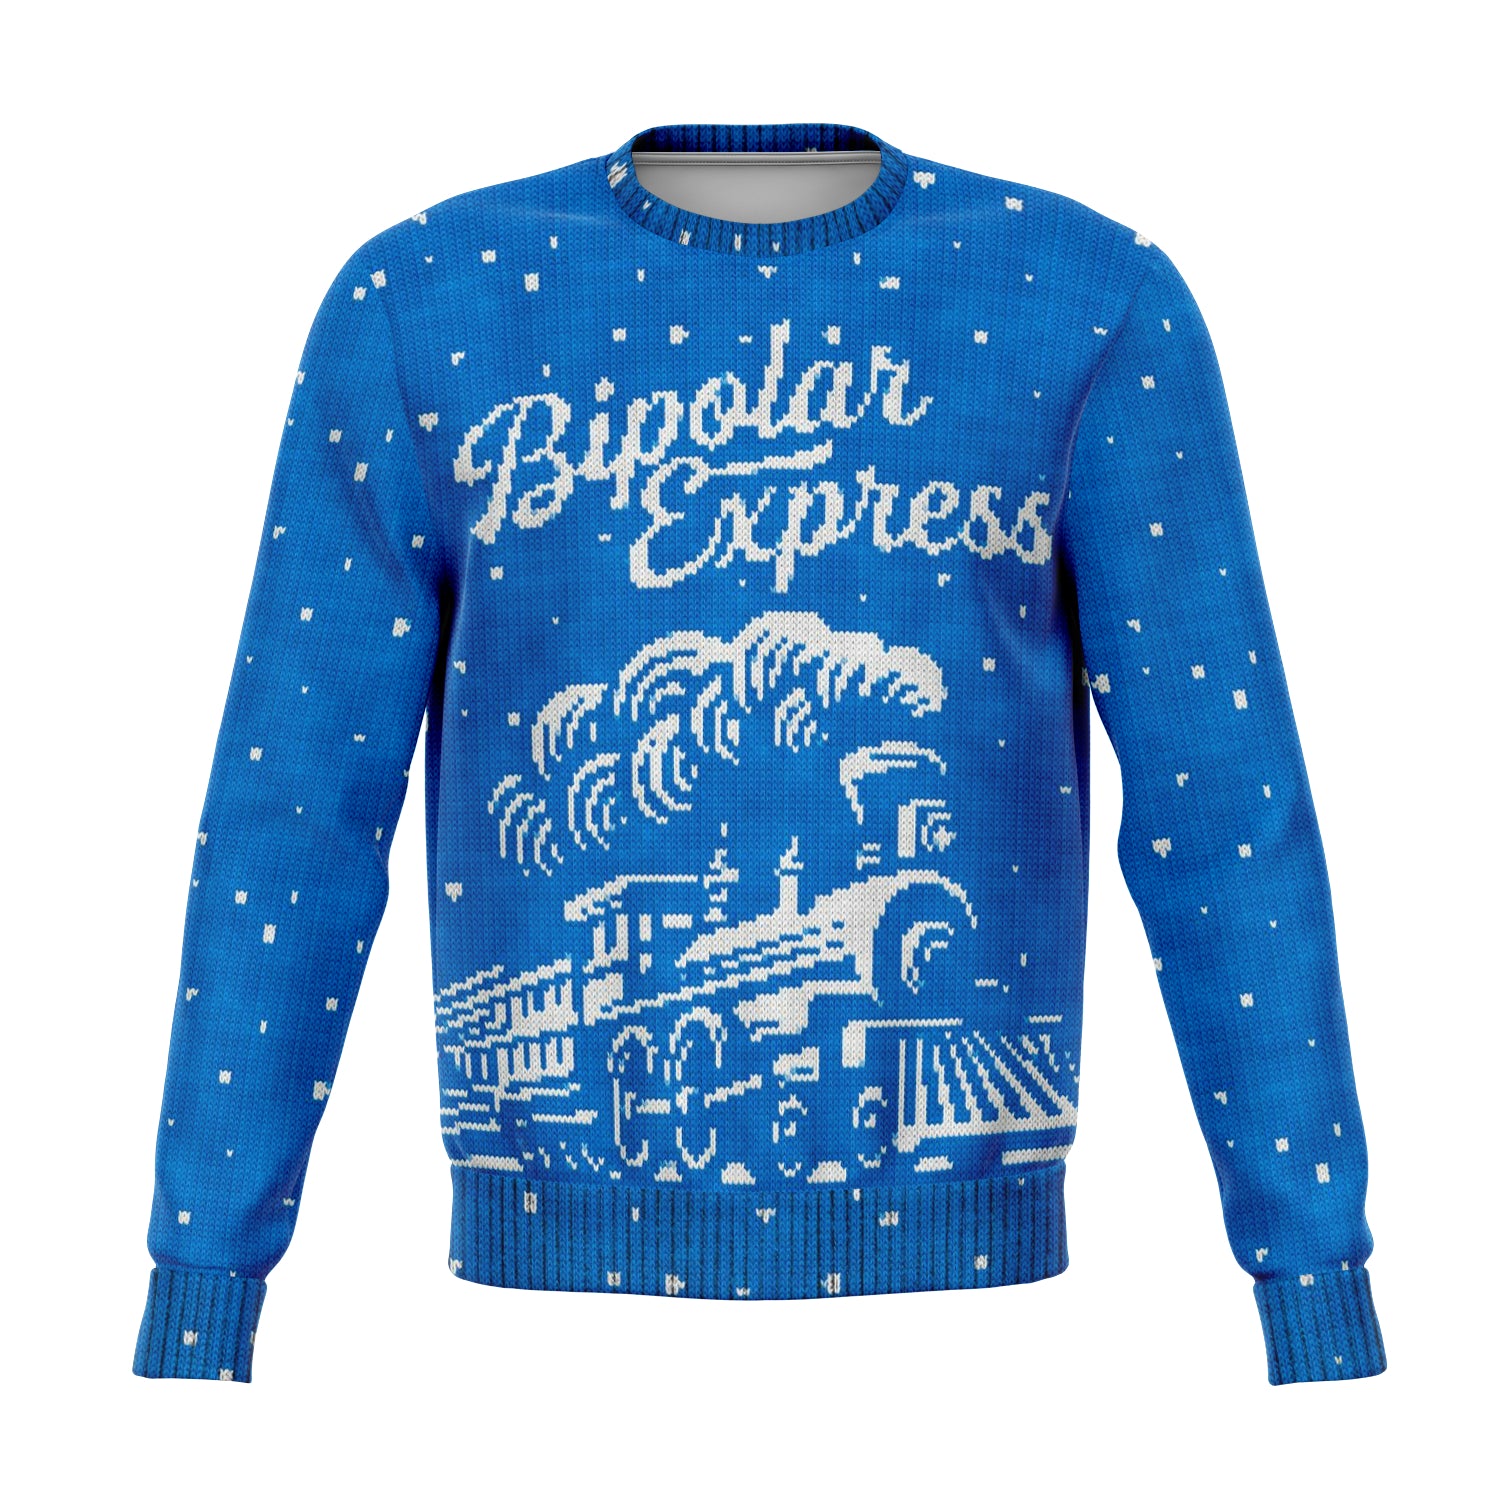 Pipolar Express Christmas Sweatshirt | Unisex Ugly Christmas Sweater, Xmas Sweater, Holiday Sweater, Festive Sweater, Funny Redhead Sweater, Funny Party Shirt